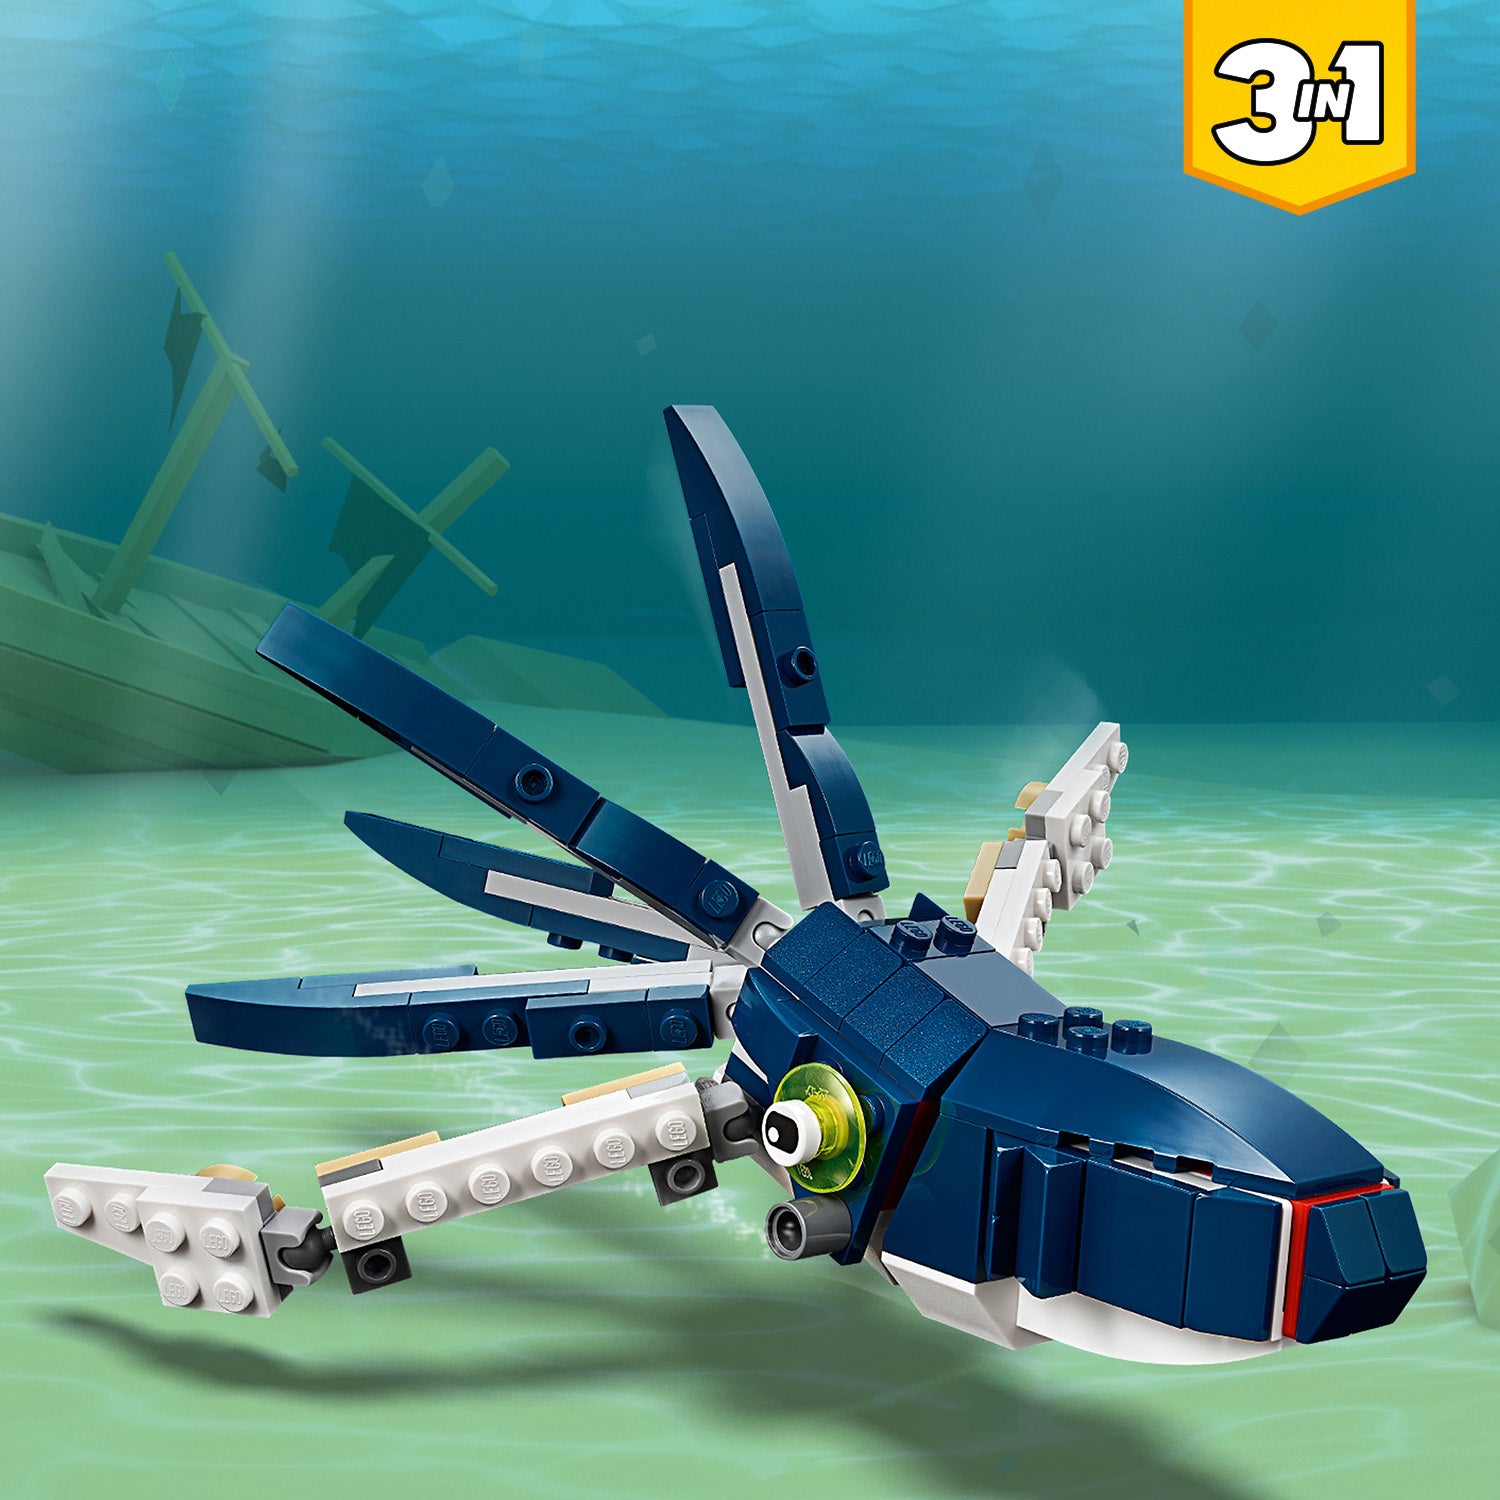 LEGO® Creator 3in1 Deep Sea Creatures Shark Set 31088 Default Title